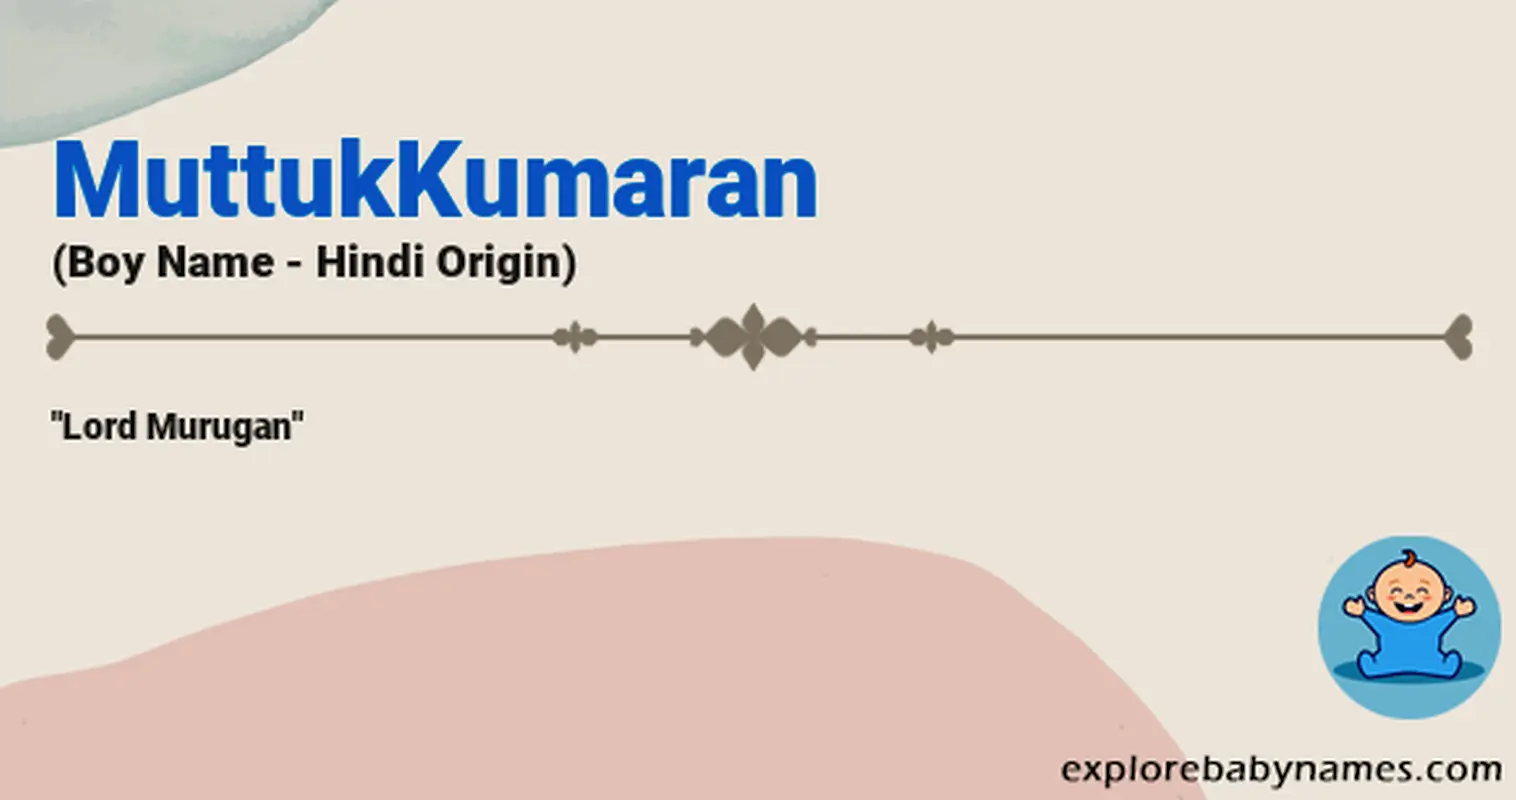 Meaning of MuttukKumaran